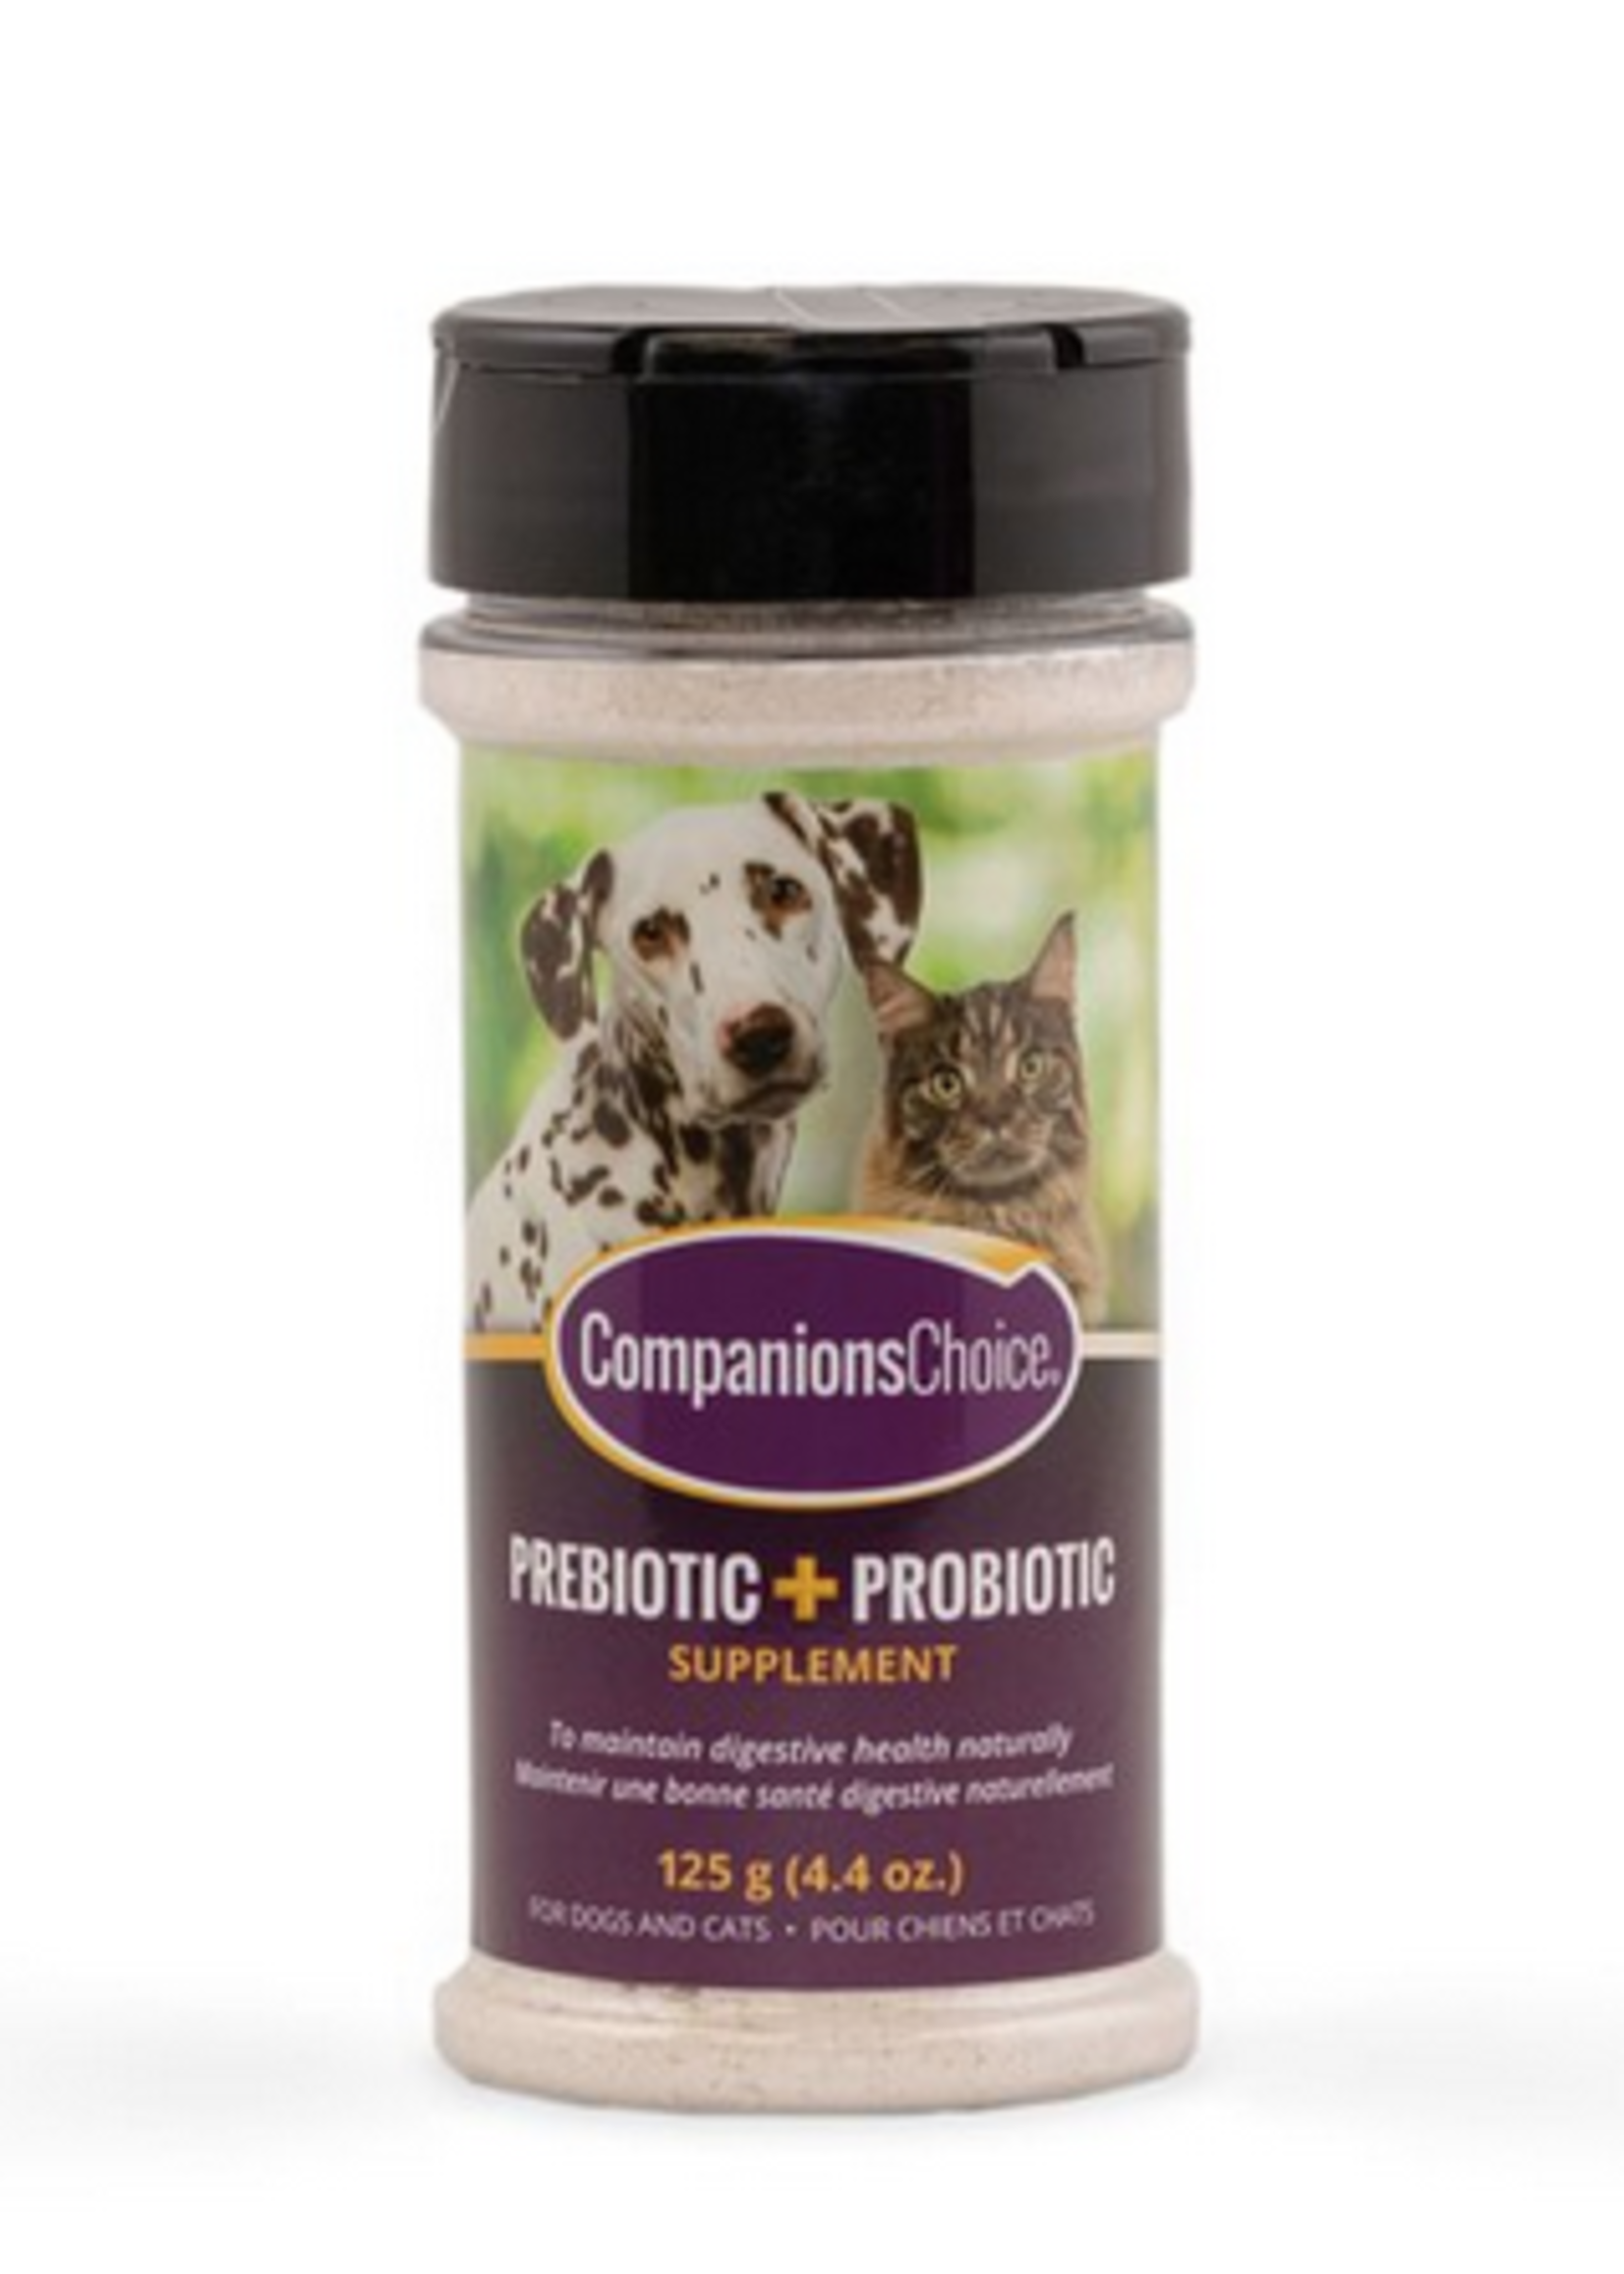 CompanionsChoice© CompanionsChoice© Prebiotic + Probiotic Supplement 125g